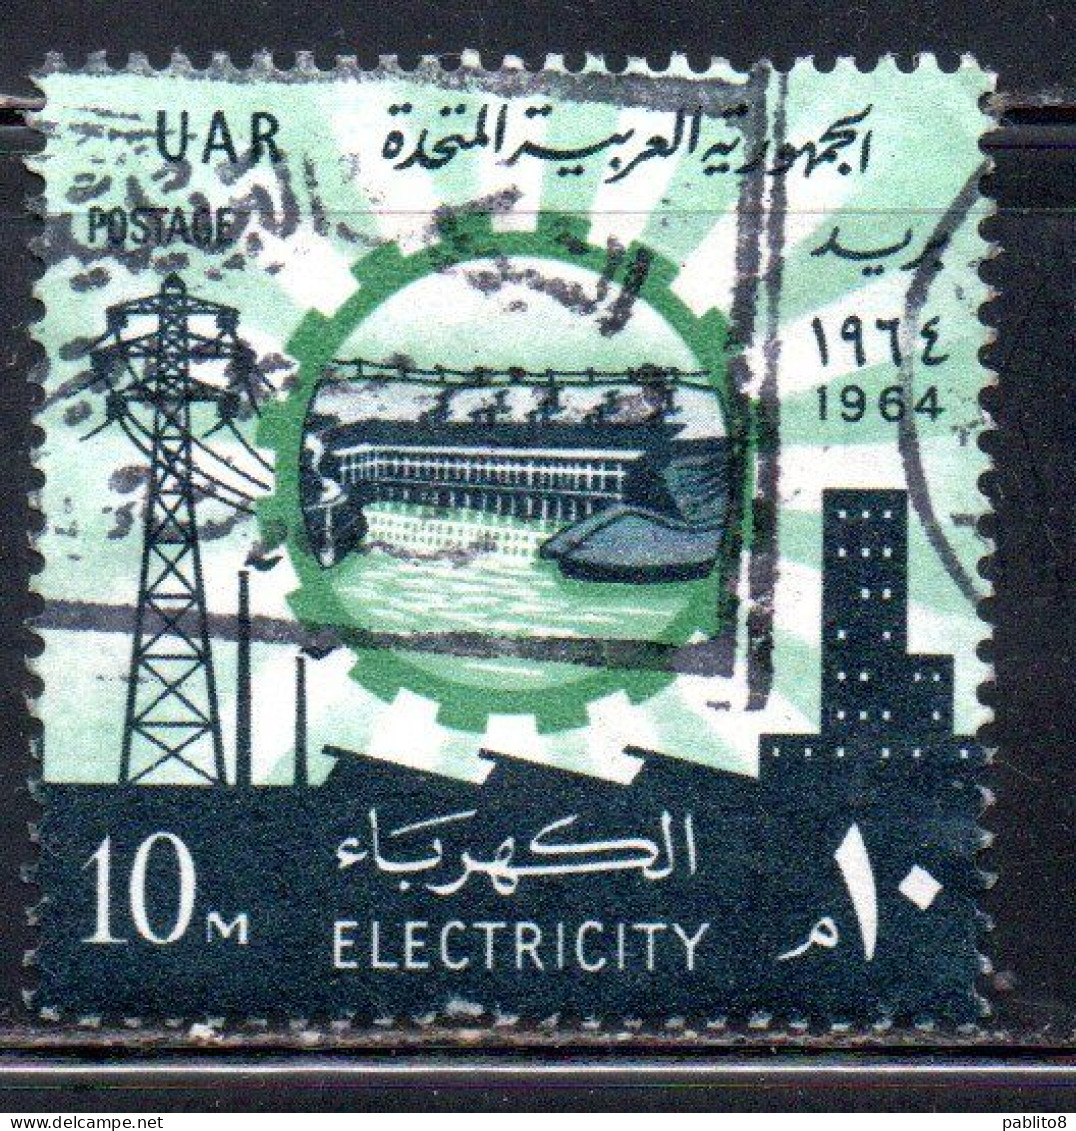 UAR EGYPT EGITTO 1964 ELECTRICITY ASWAN HIGH DAM HYDROELICTRIC POWER STATION LAND RECLAMATION 10m USED USATO - Usati